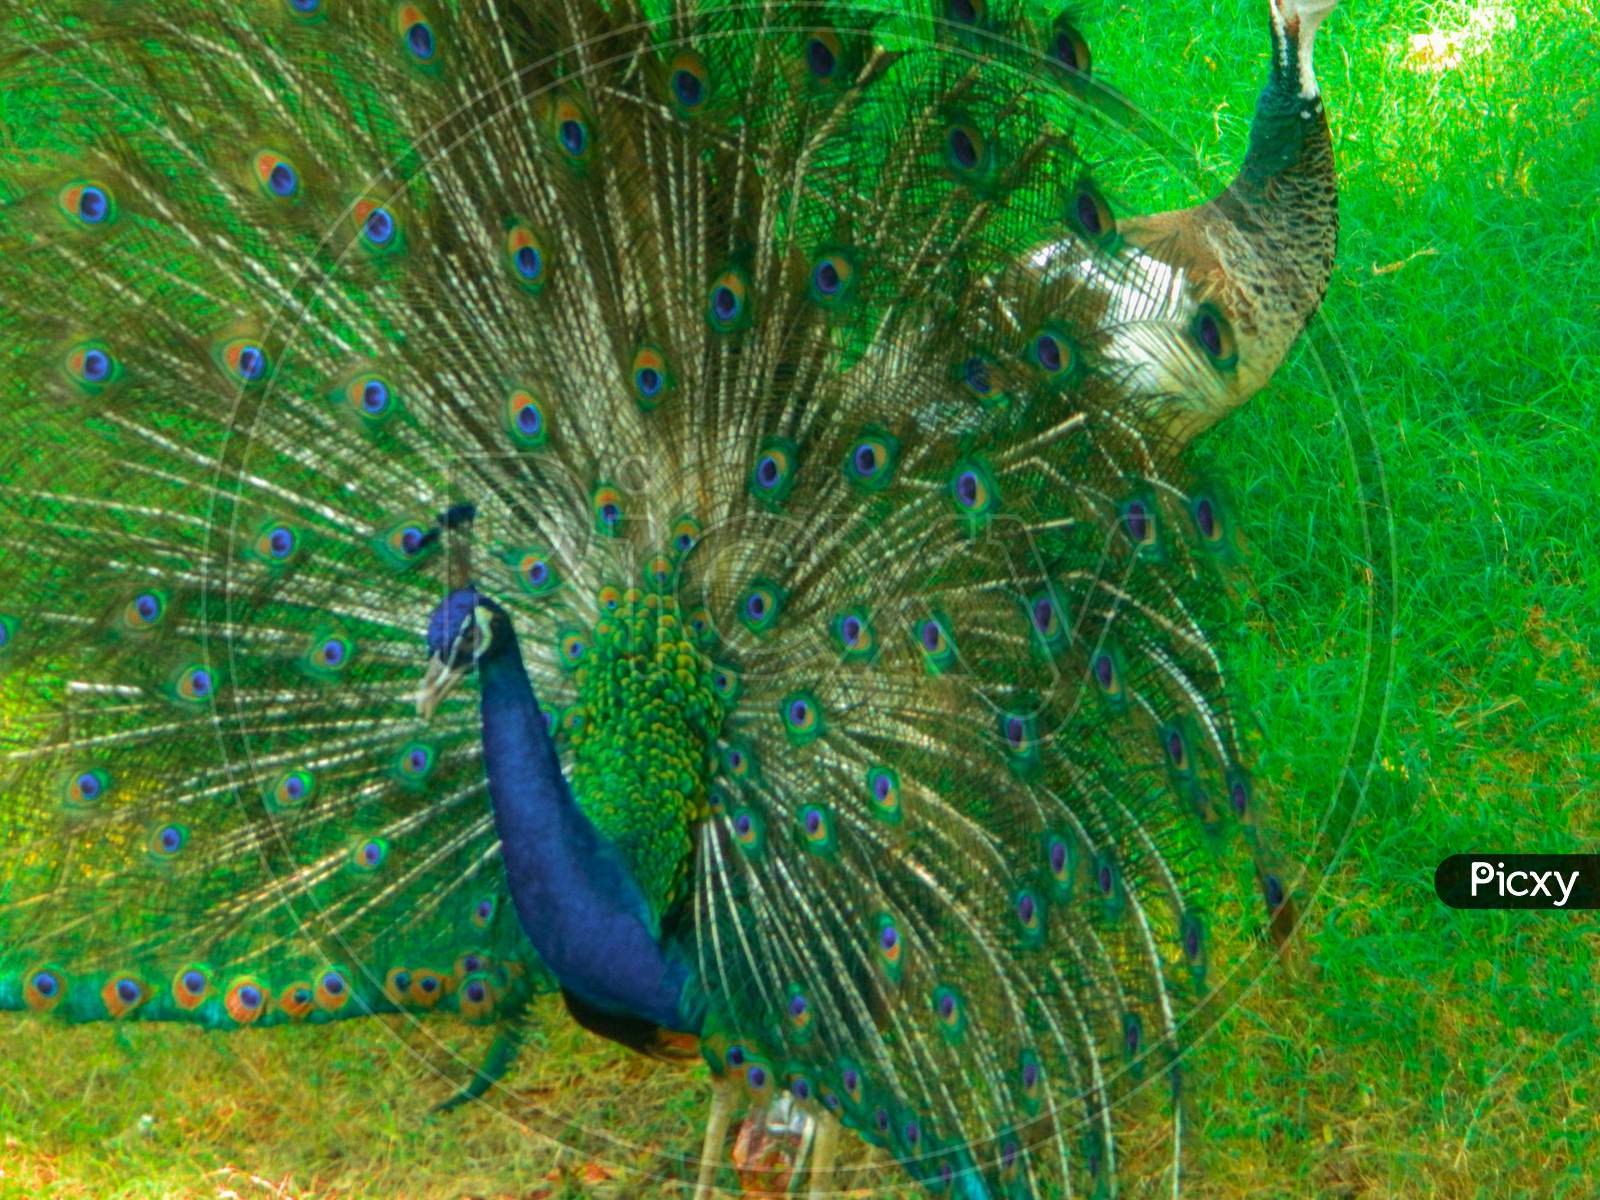 images of peacock dancing